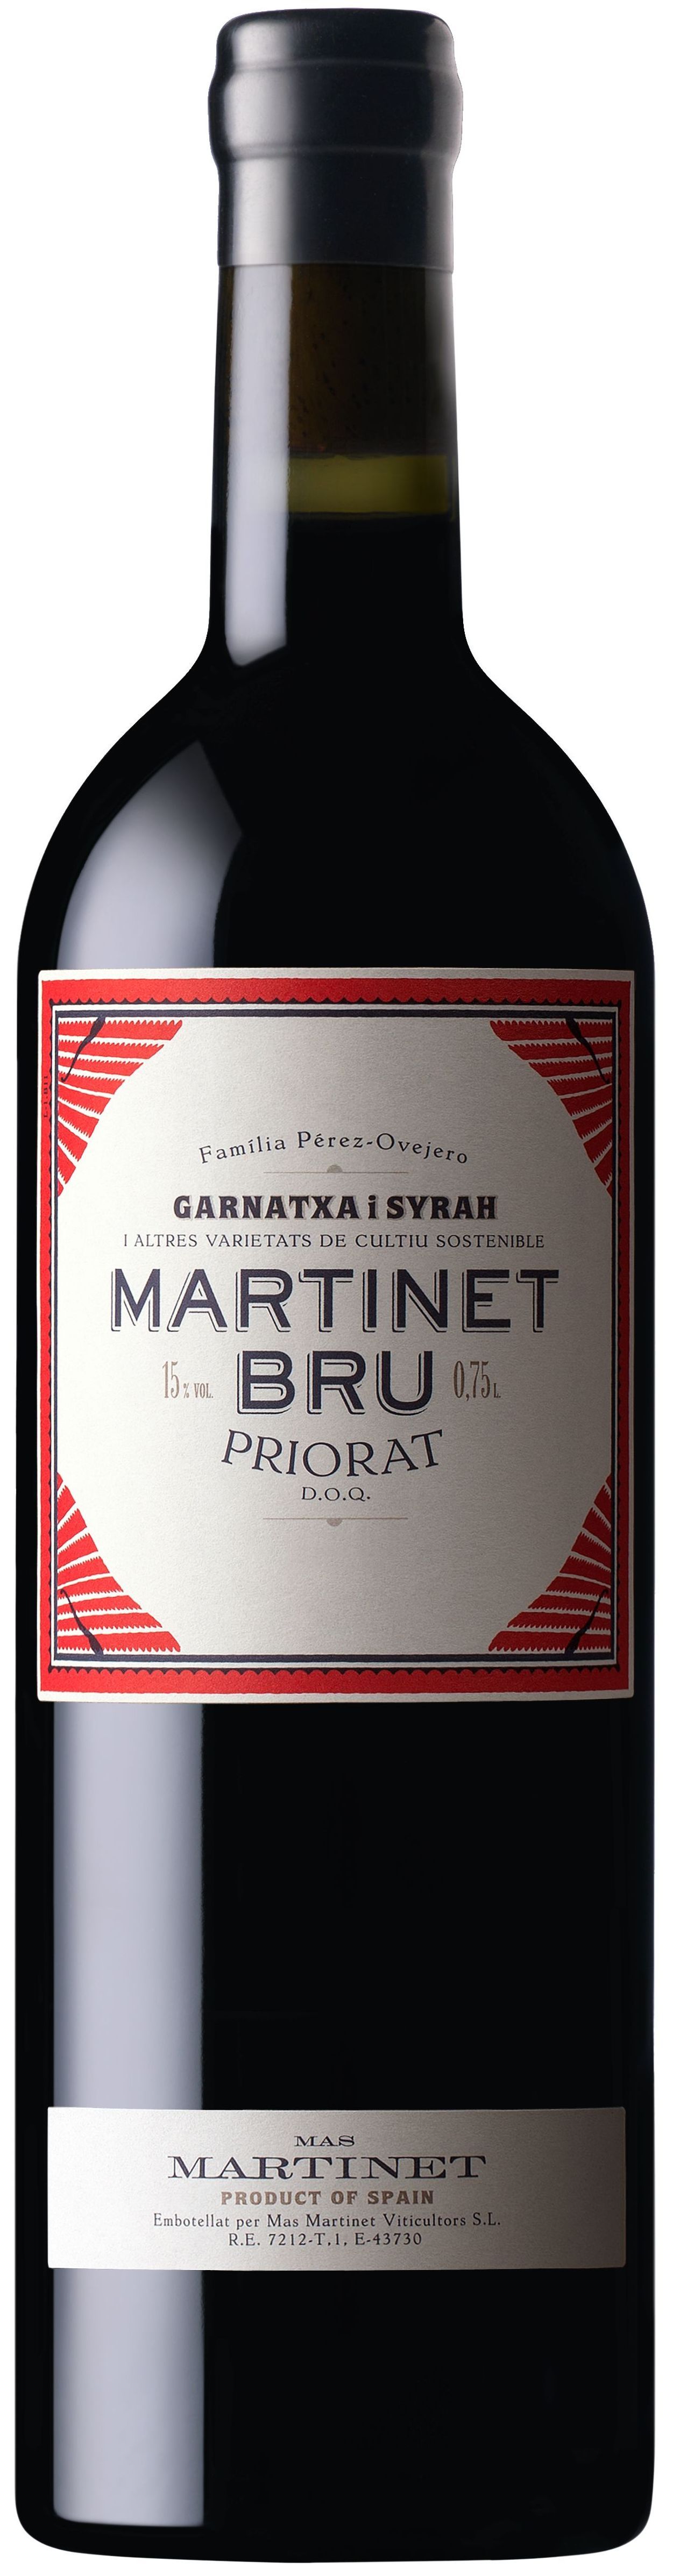 Mas Martinet, Martinet Bru, 2015